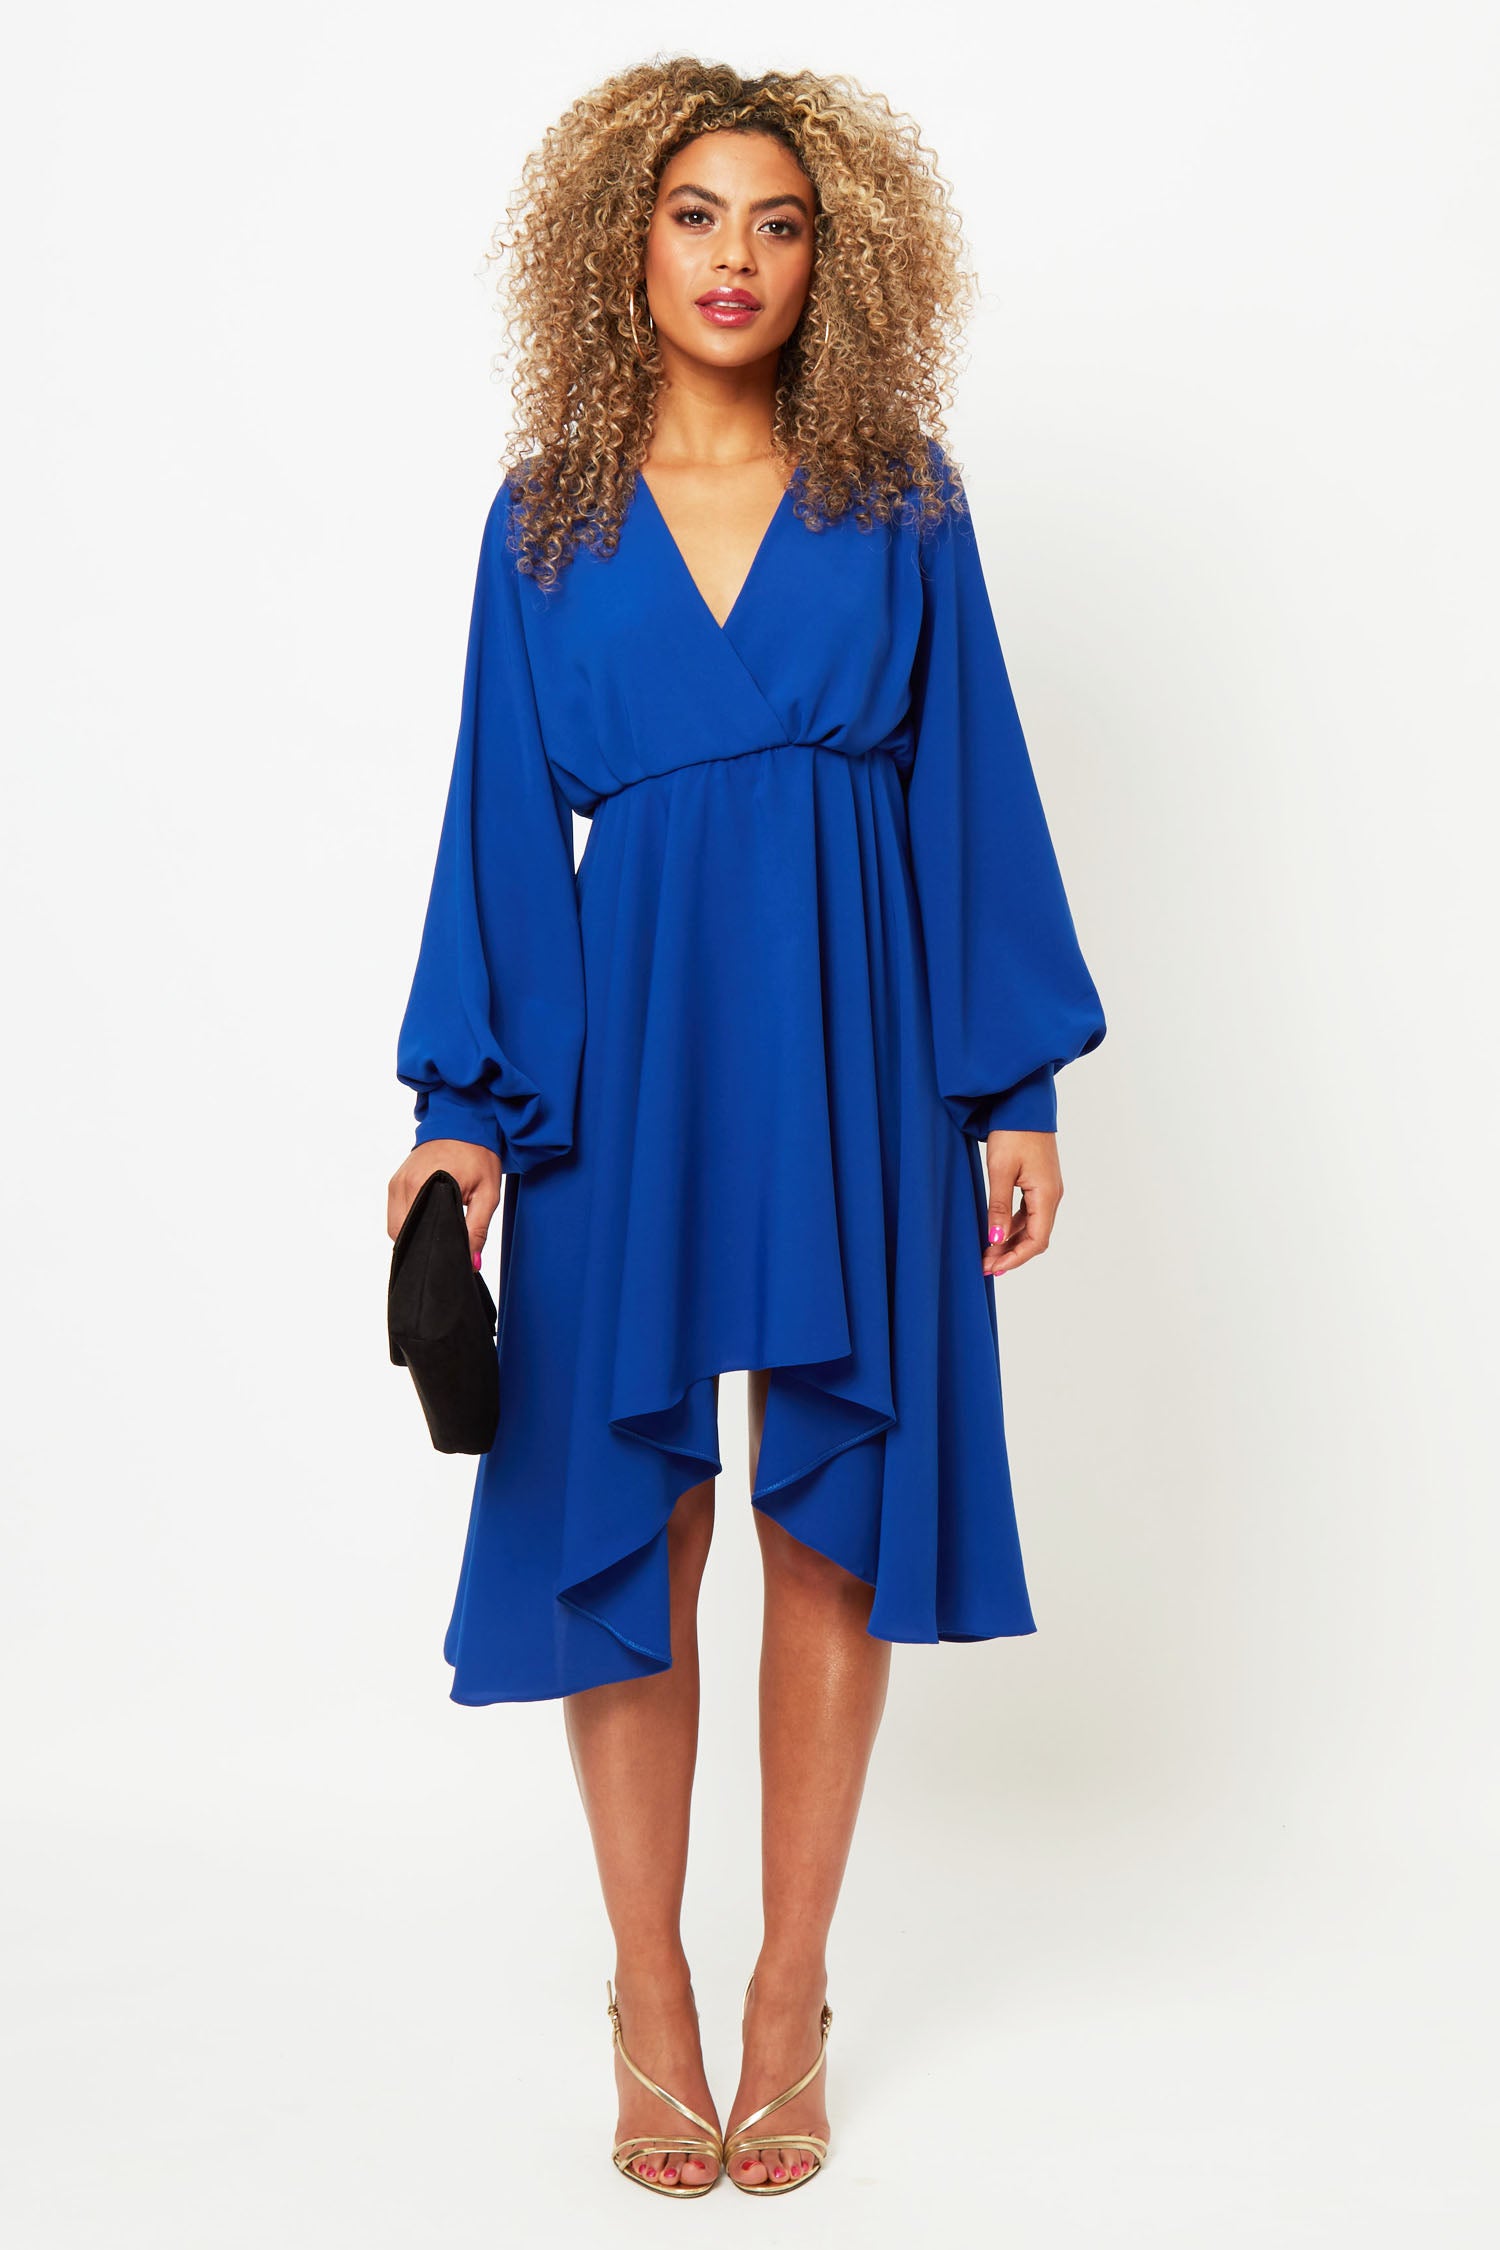 Cobalt blue dress with long sleeves and cascade skirt